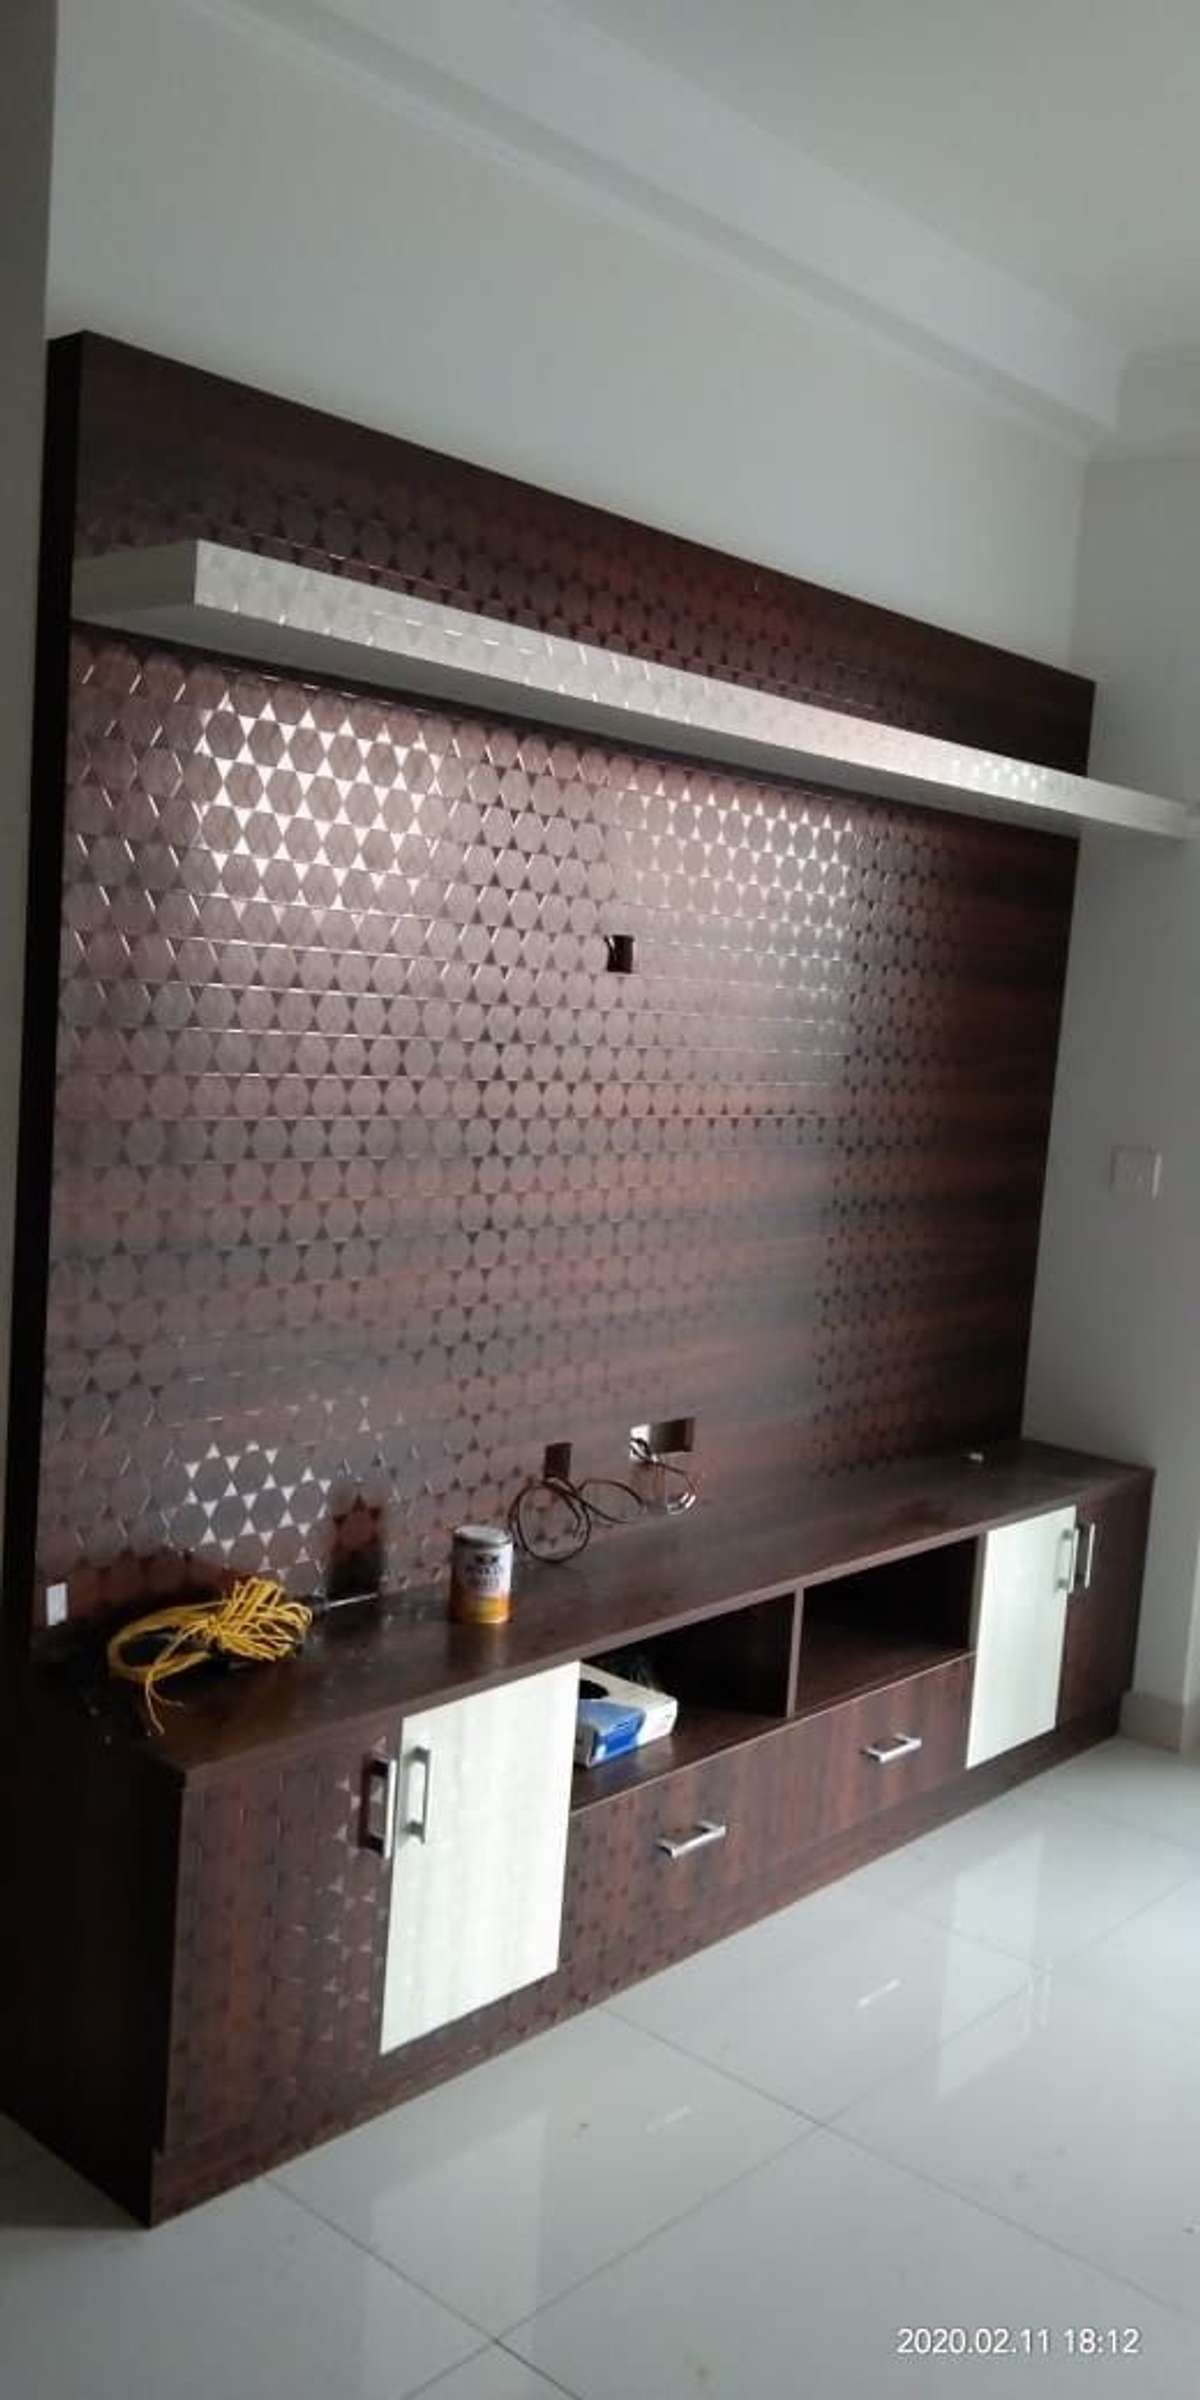 Living, Storage Designs by Carpenter ЁЯЩП рдлреЙрд▓реЛ рдХрд░реЛ рджрд┐рд▓реНрд▓реА рдХрд╛рд░рдкреЗрдВрдЯрд░ рдХреЛ, Delhi | Kolo